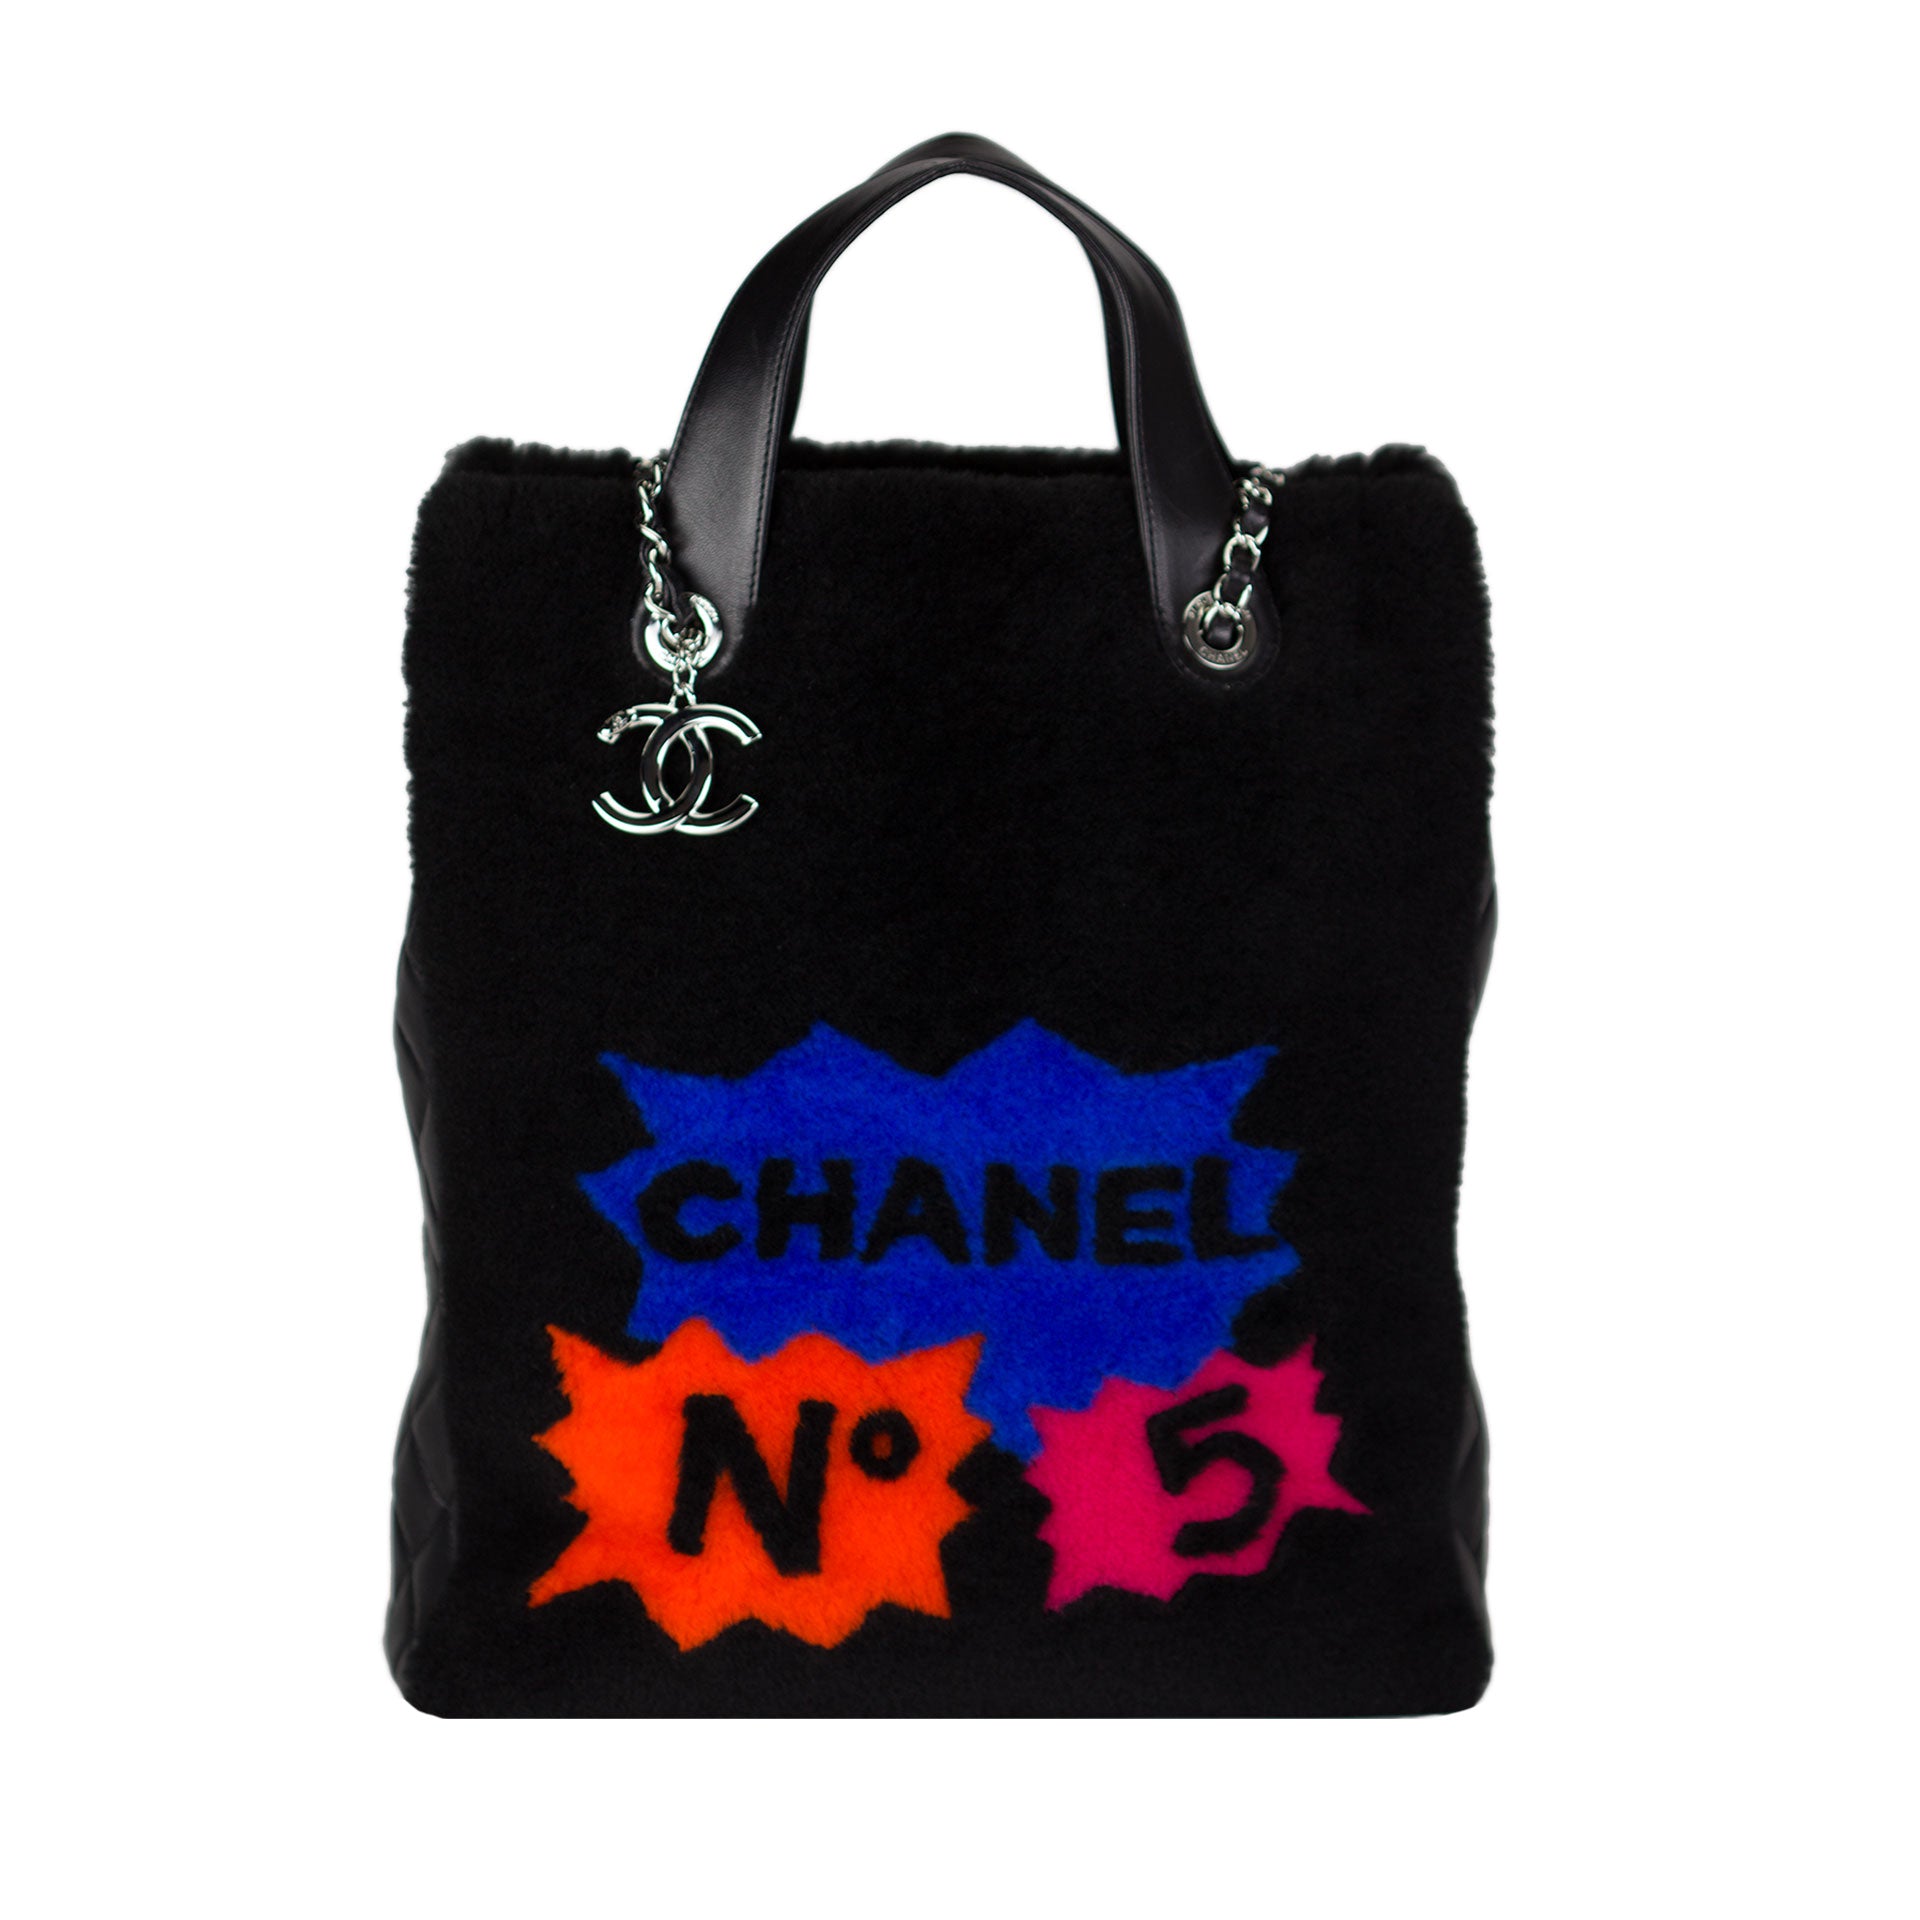 Chanel Timeless Maxi Shearling Pop Art No. 5